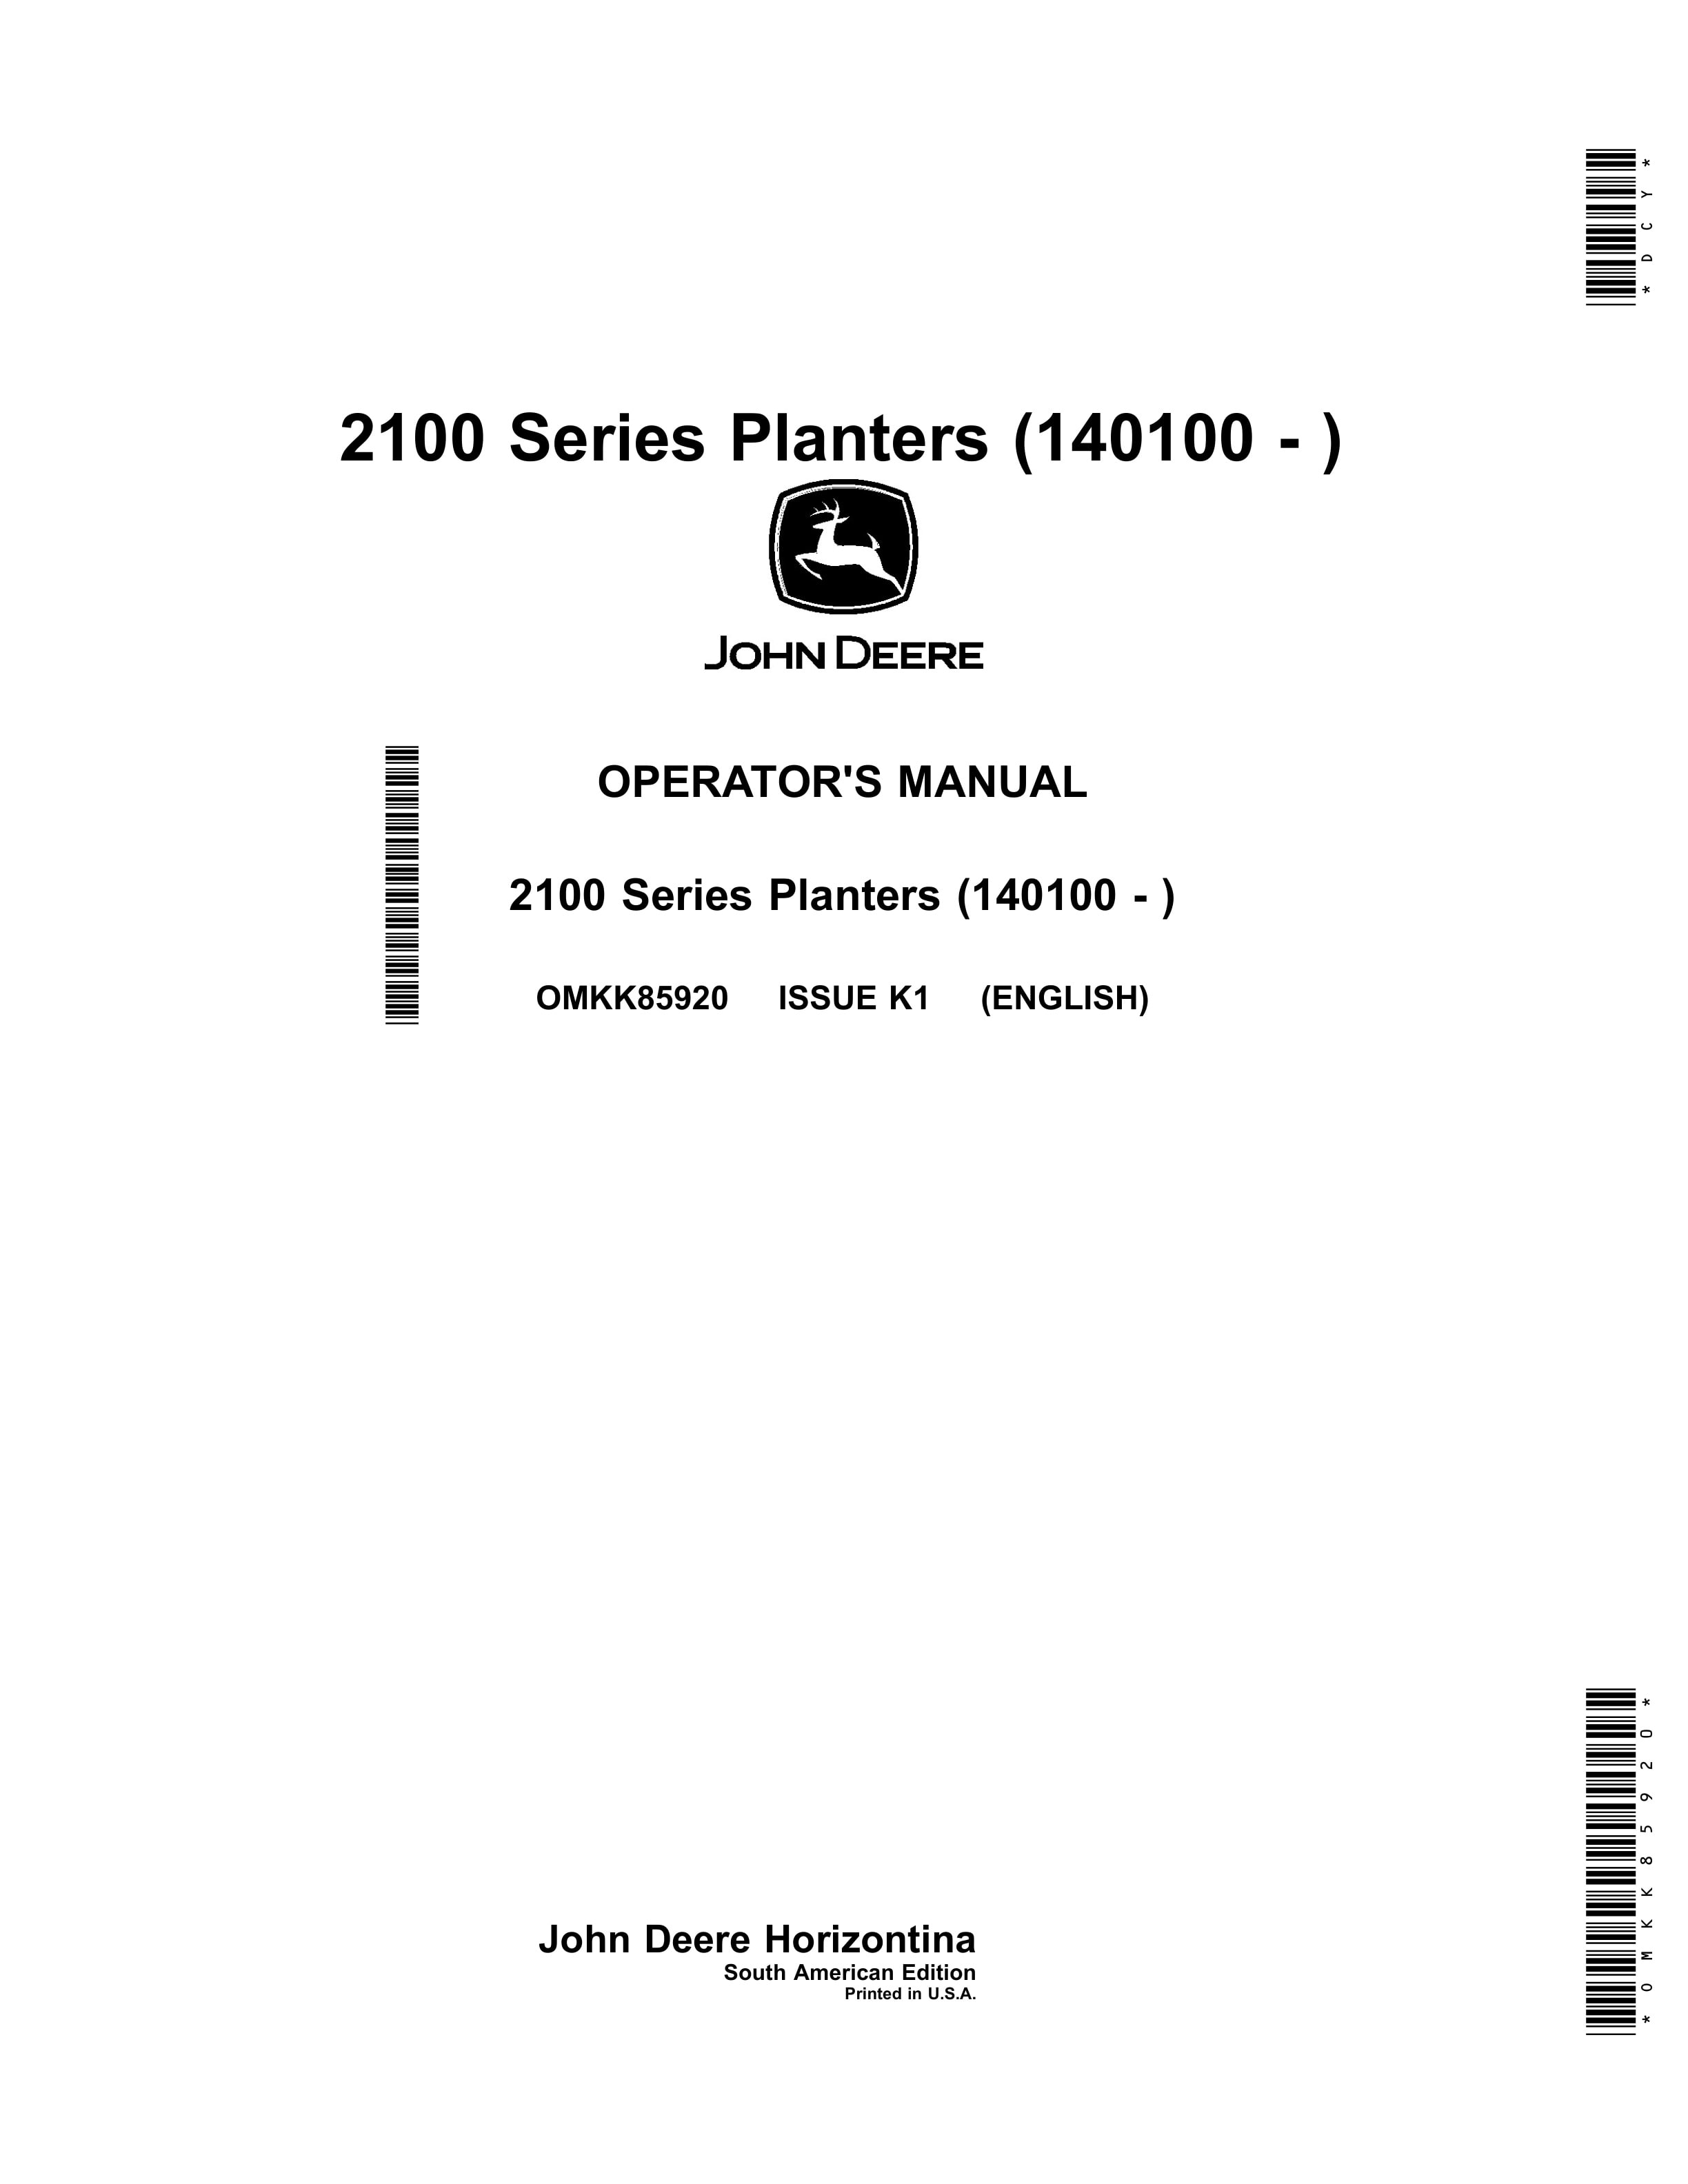 John Deere 2100 Series Planter Operator Manual OMKK85920 1